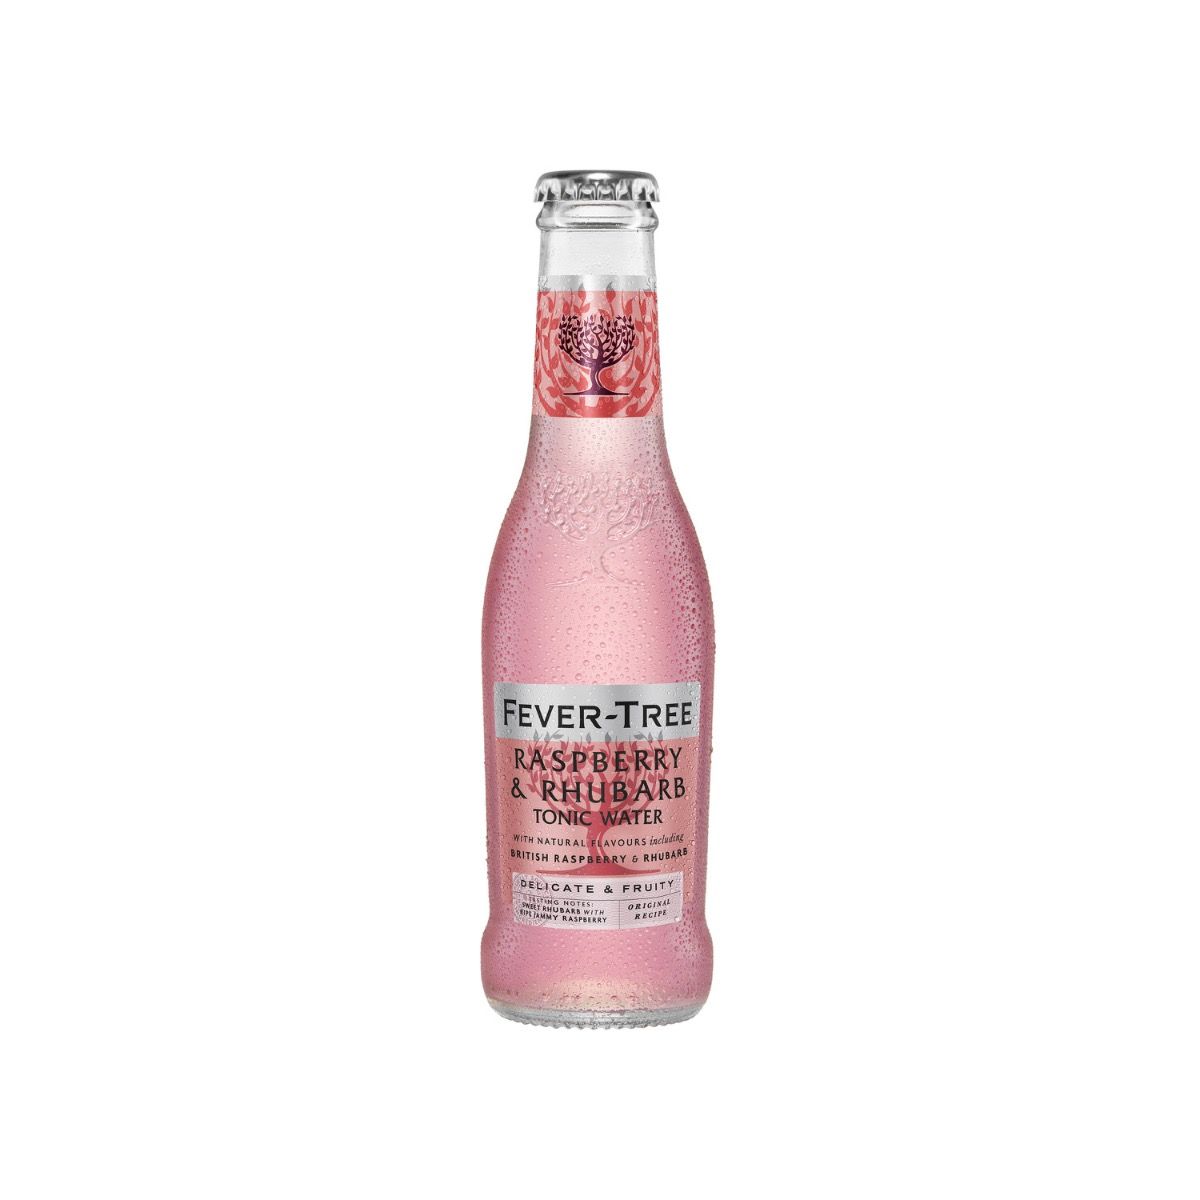 fever-tree-raspberry-and-rhubarb-tonic-water-200ml-spritz